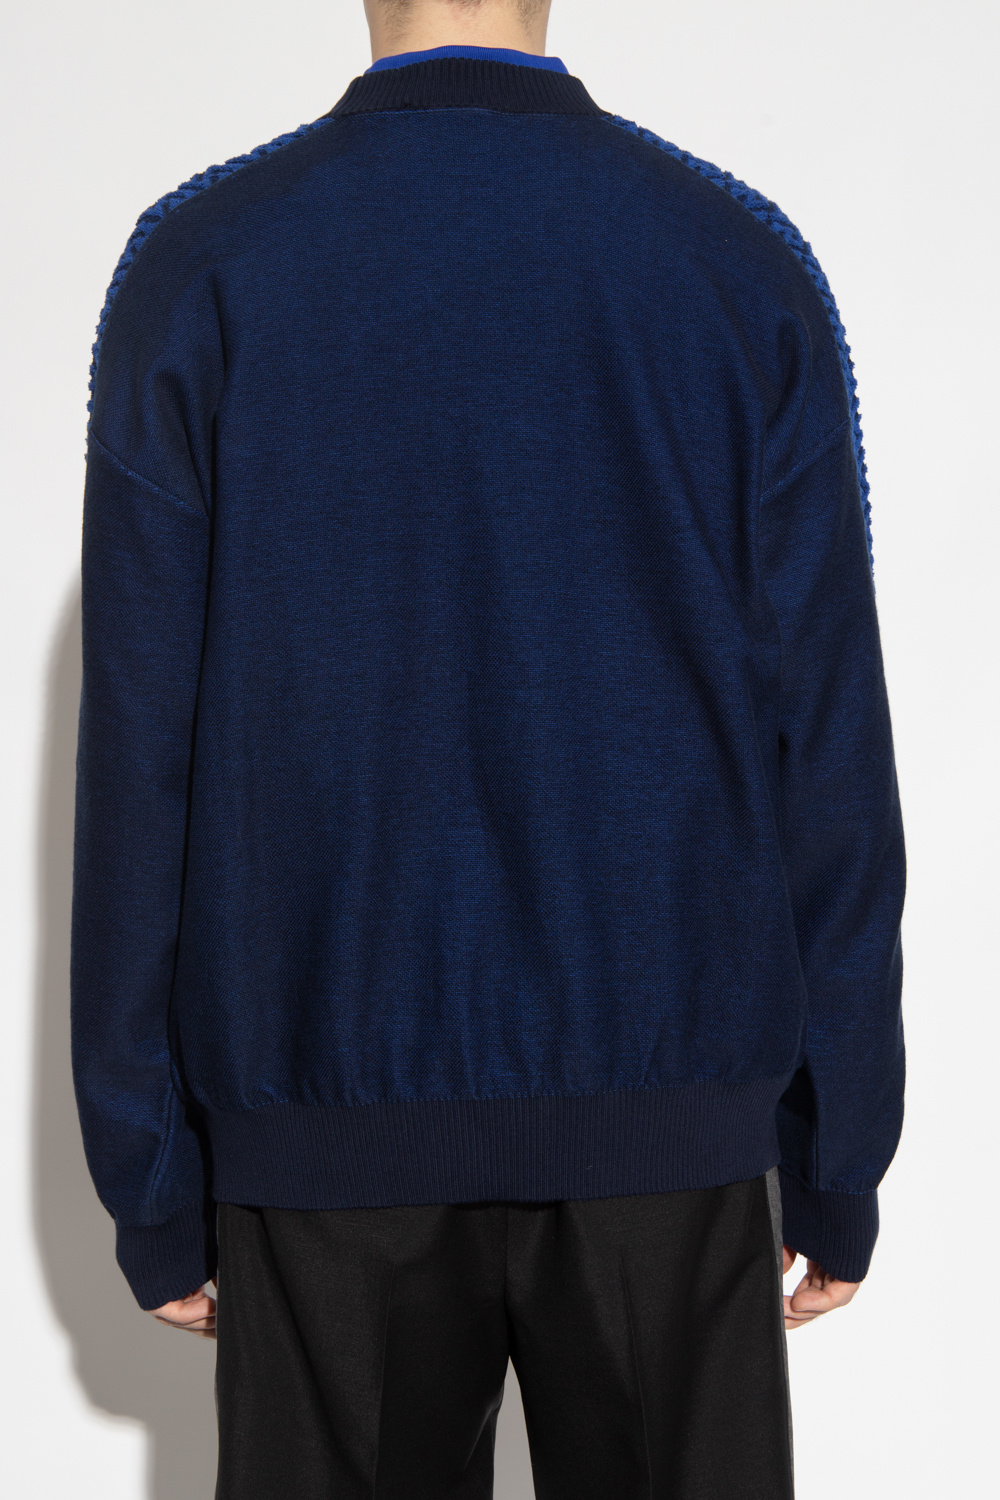 Versace Tommy Hilfiger x Timberland Unisex Puffer Jacket